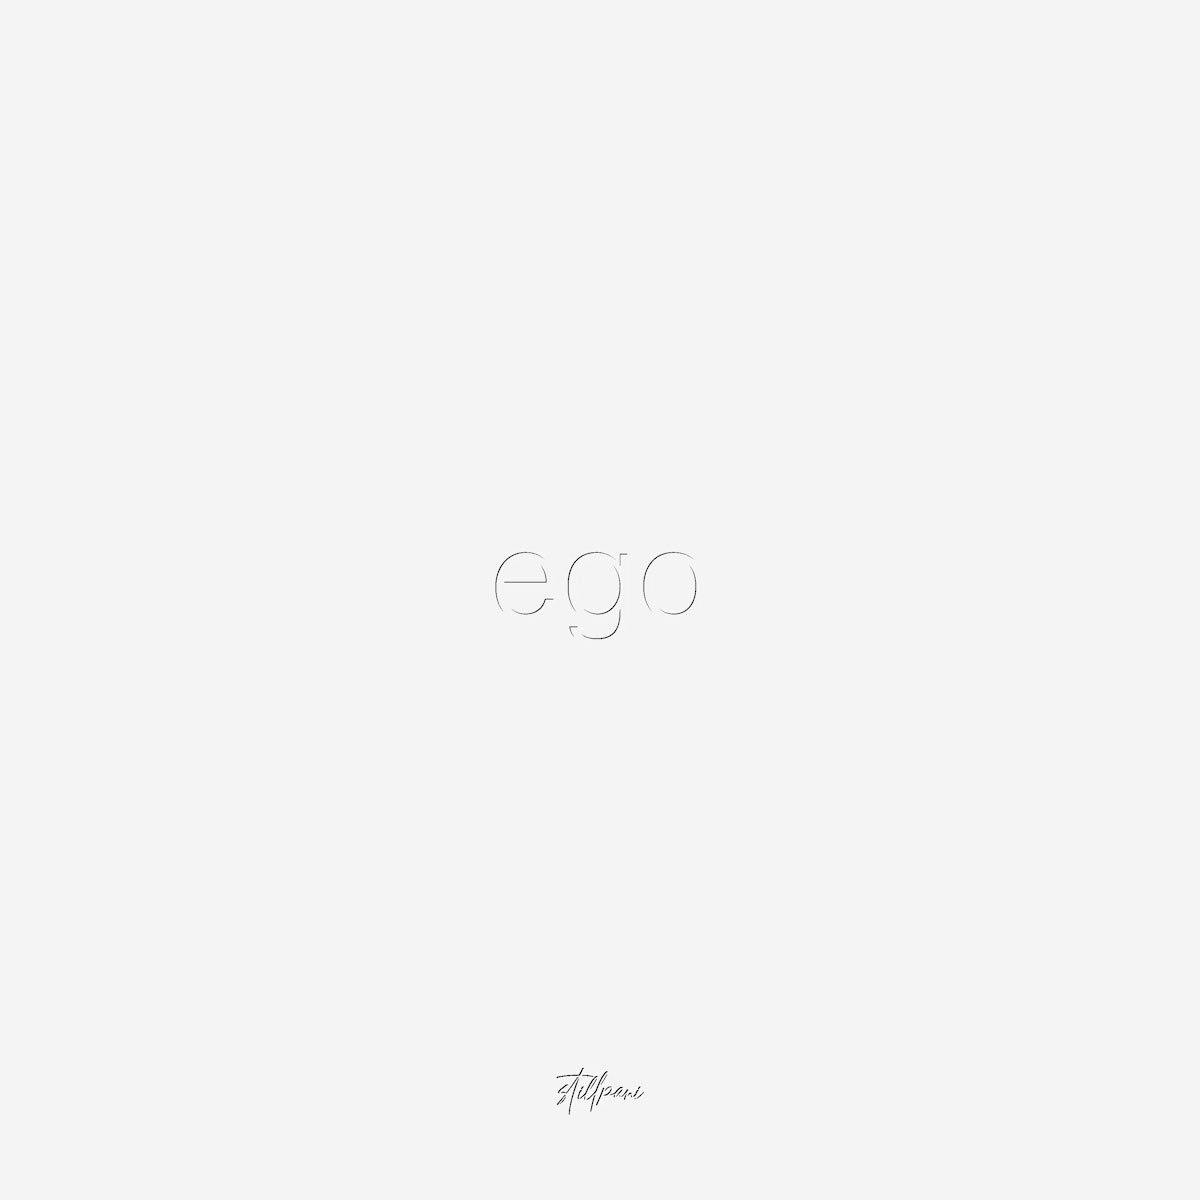 STILLPANI: dal 26 gennaio in radio “EGO” il nuovo singolo